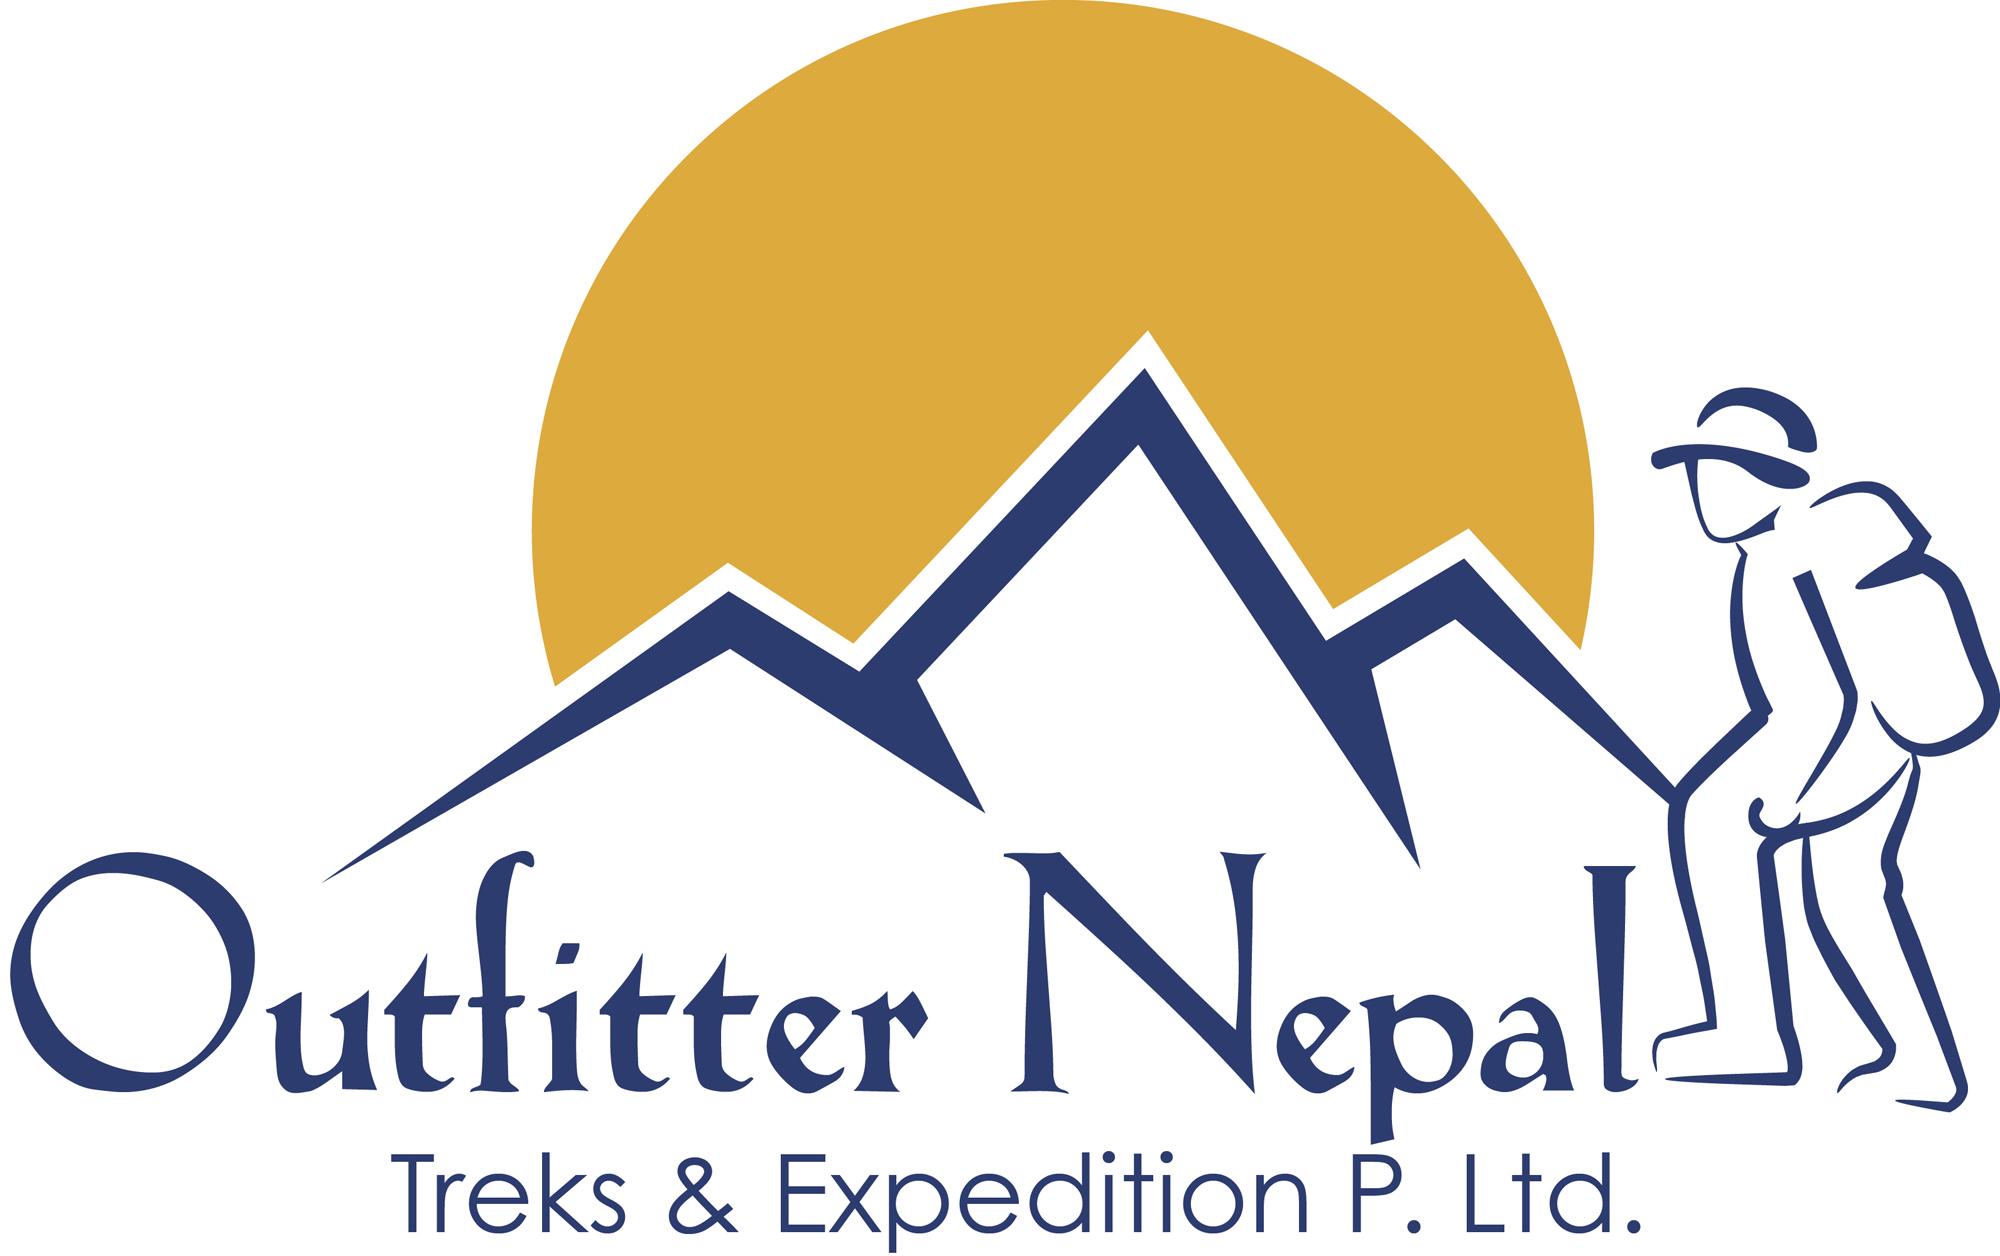 Outfitter Nepal Treks & Exp. Pvt